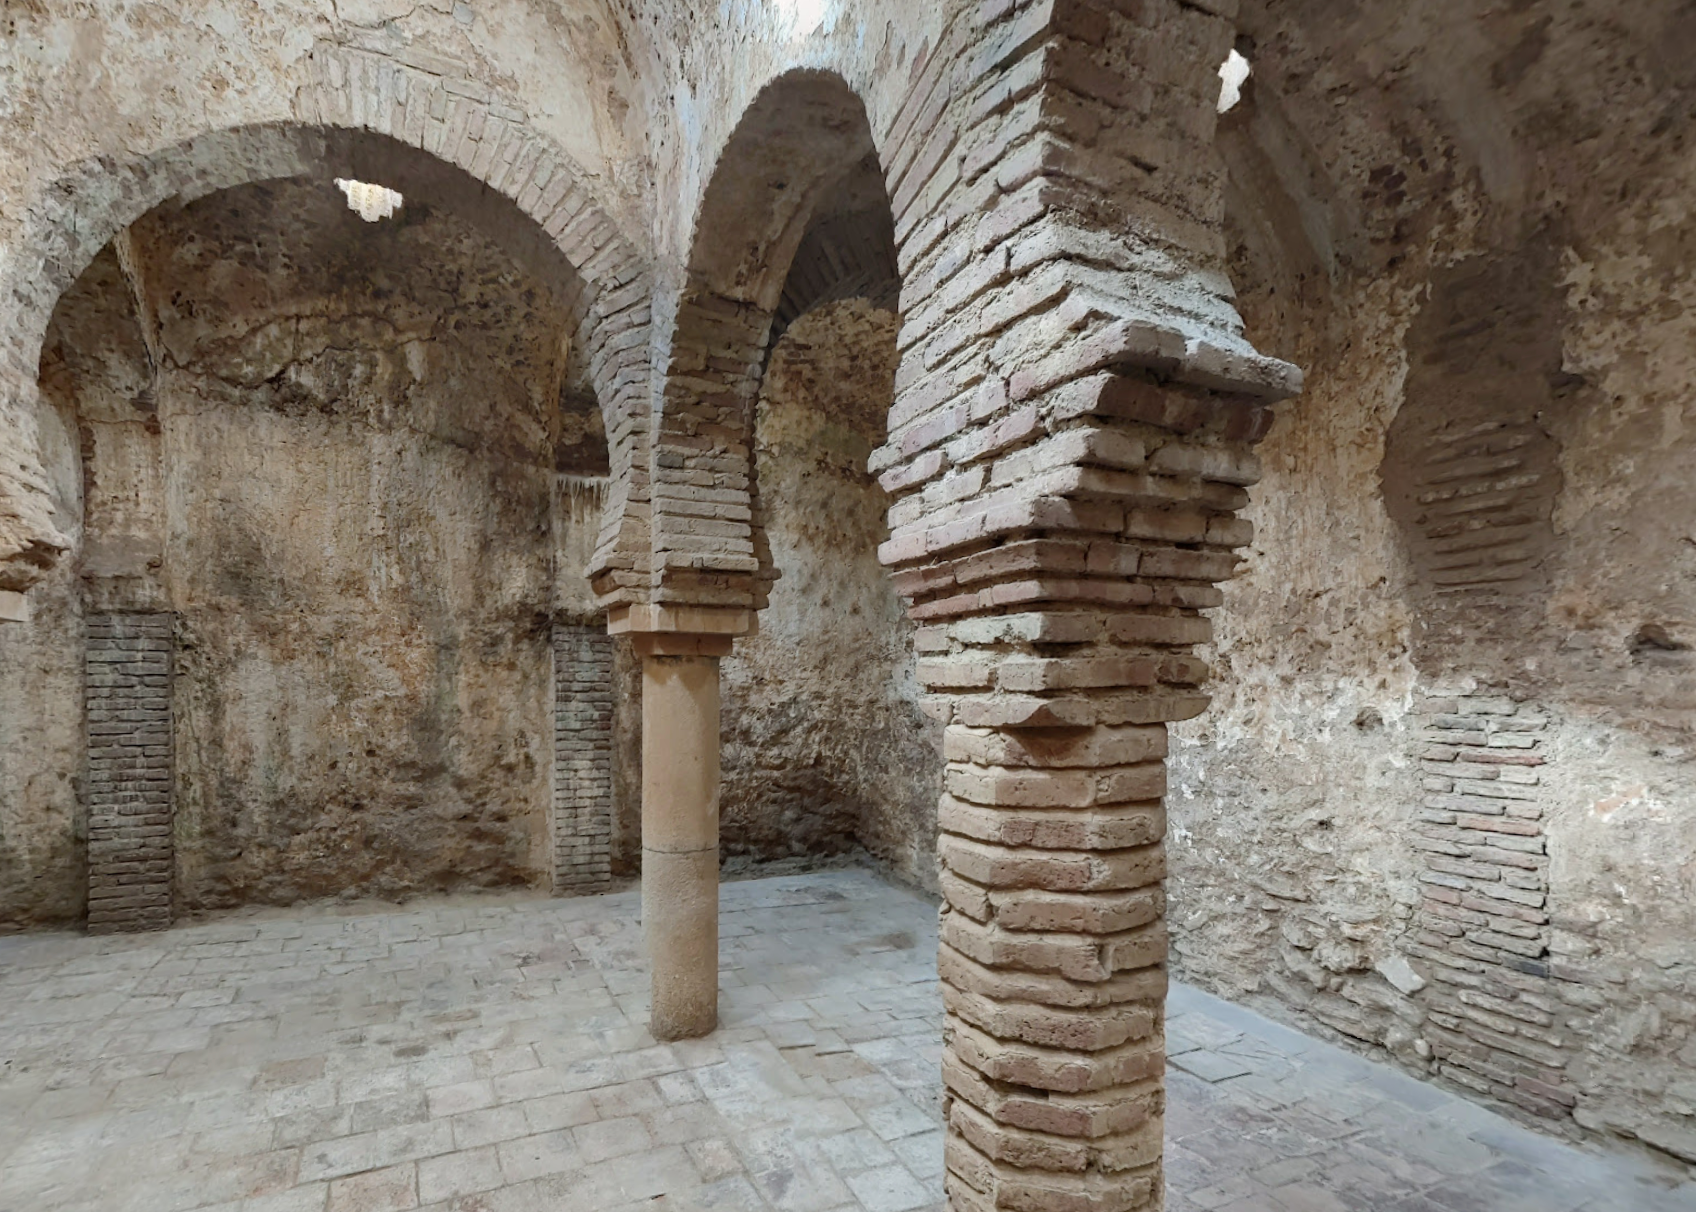 Arab Baths Archaeological Site